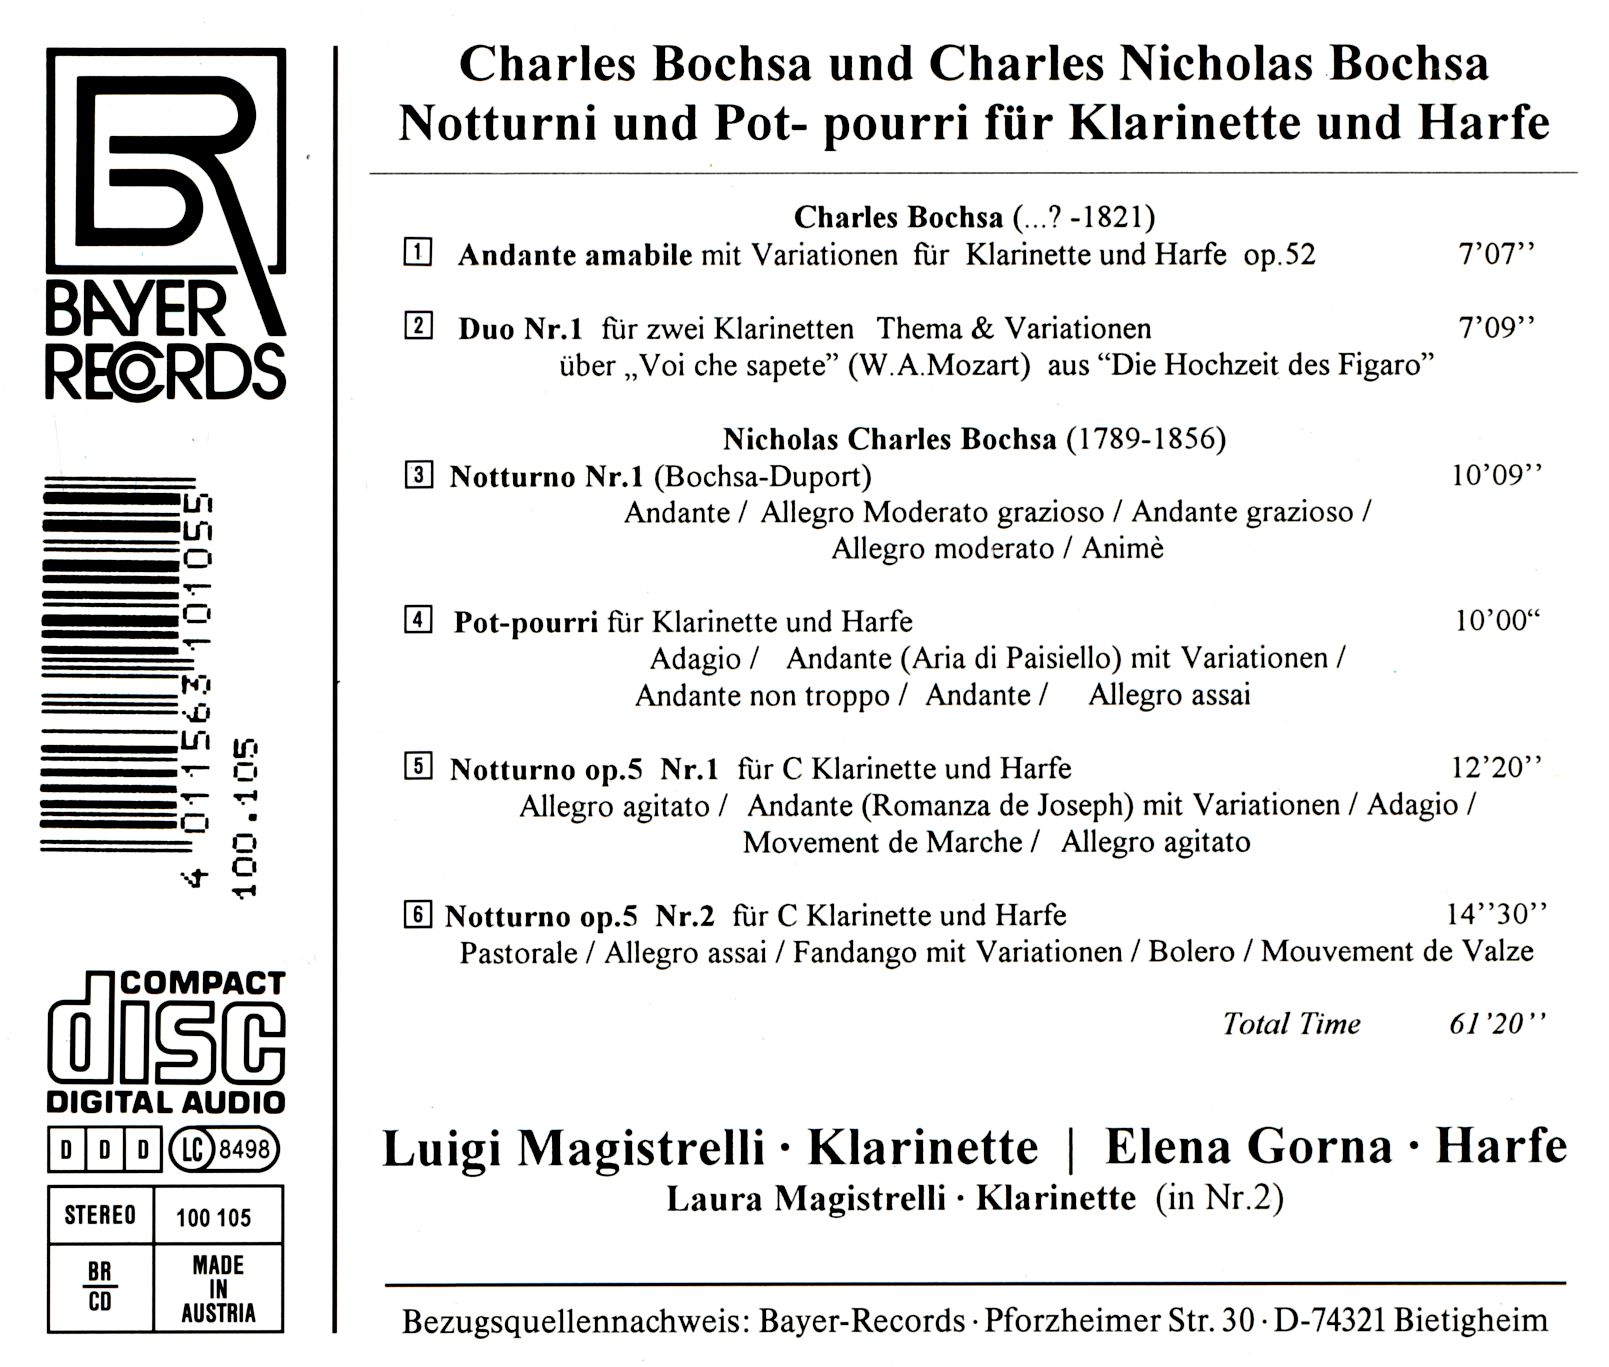 Charles Bochsa - Klarinette & Harfe